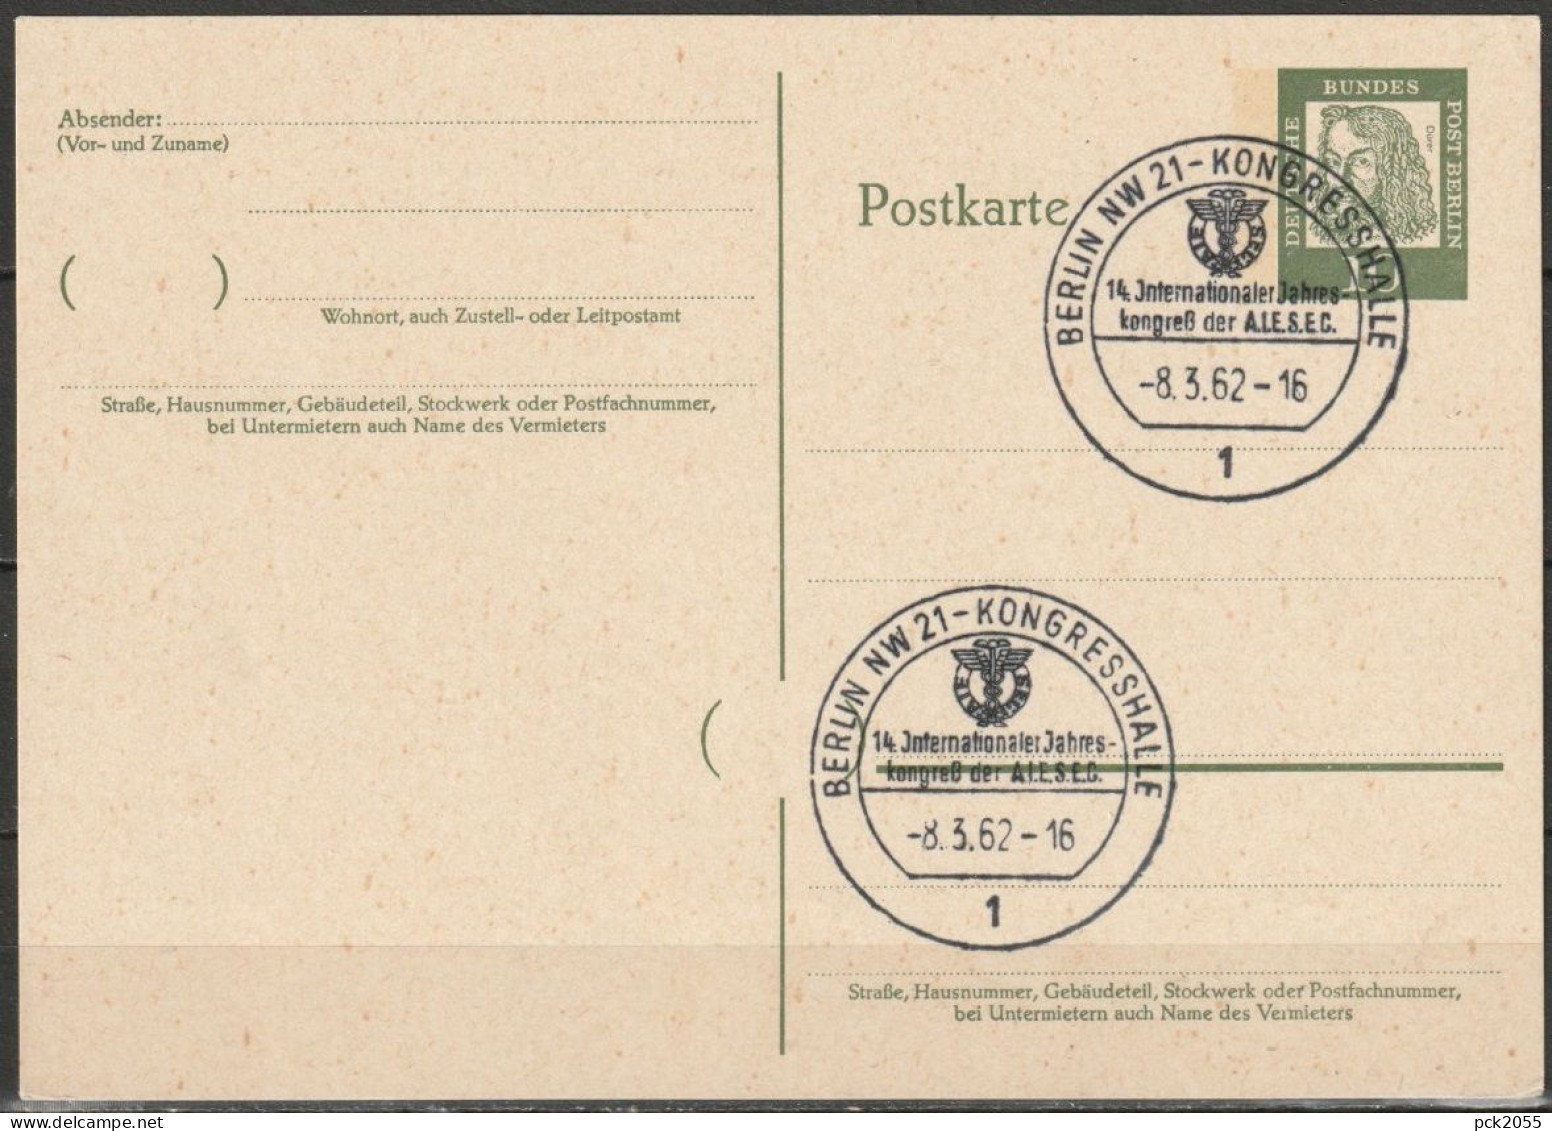 Berlin Ganzsache 1961 Mi.-Nr. P 51 Sonderstempel BERLIN-Kongresshalle 8.3.62  ( PK 222 ) - Cartes Postales - Oblitérées